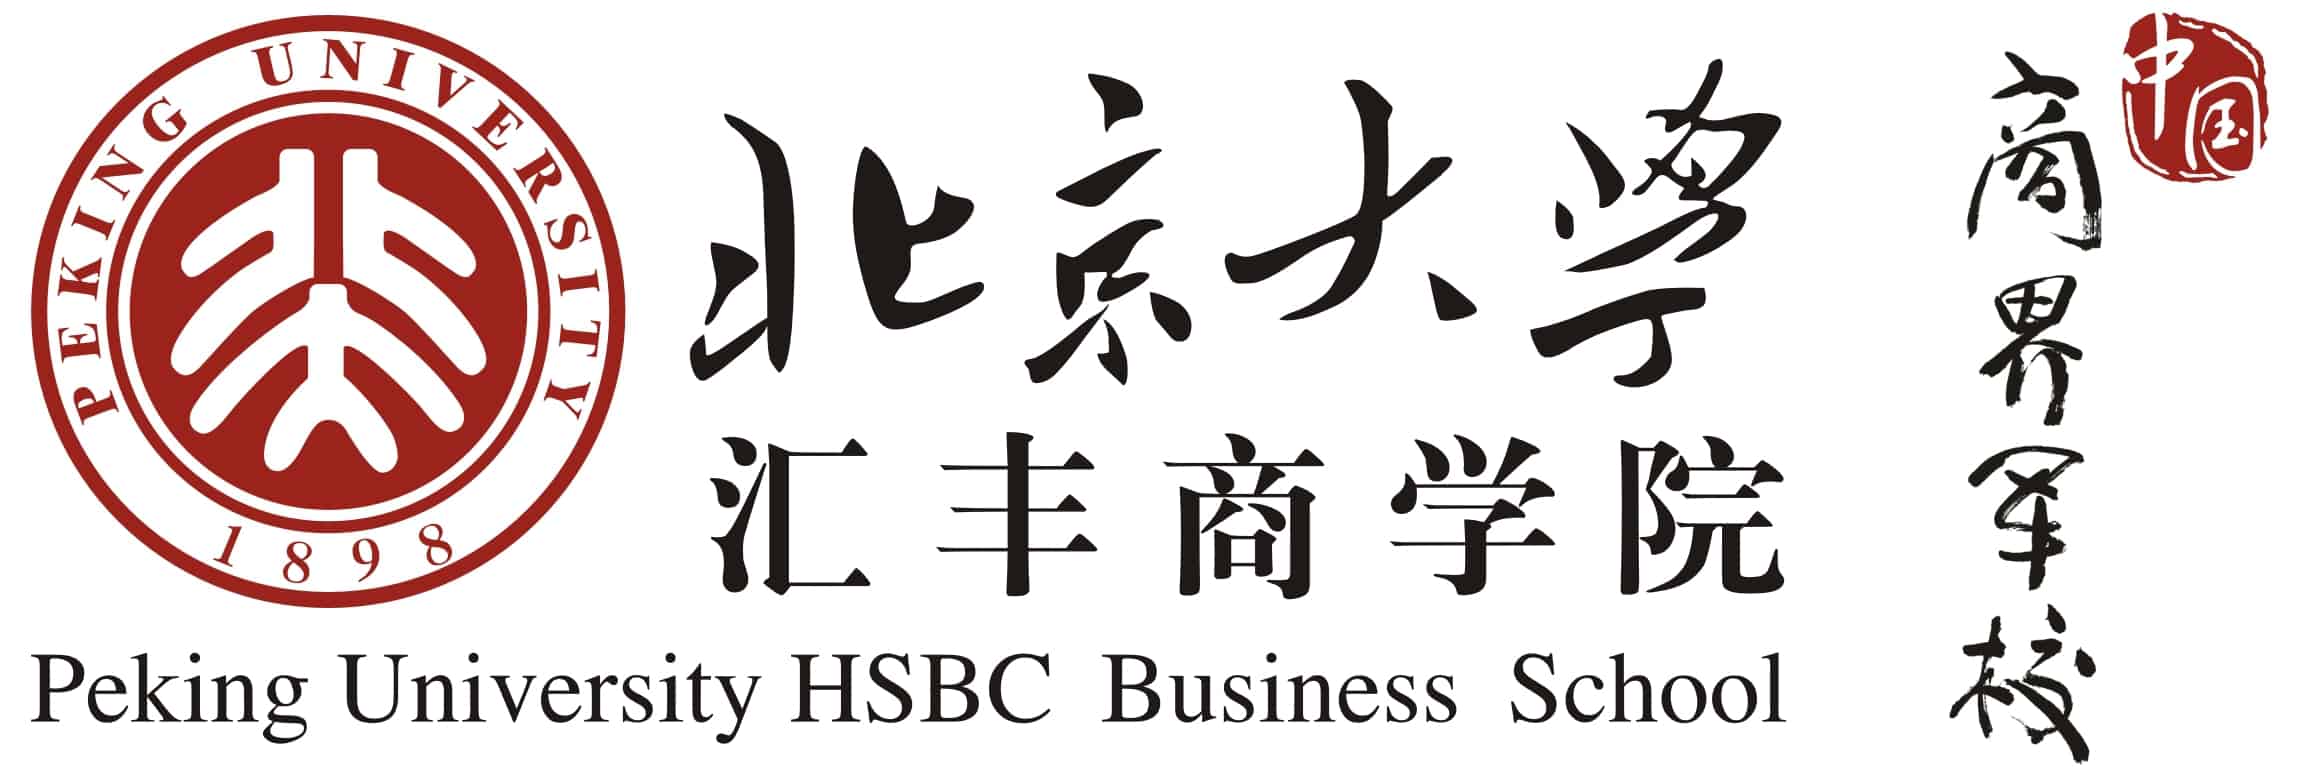 Featured image for “Peking University HSBC Business School”